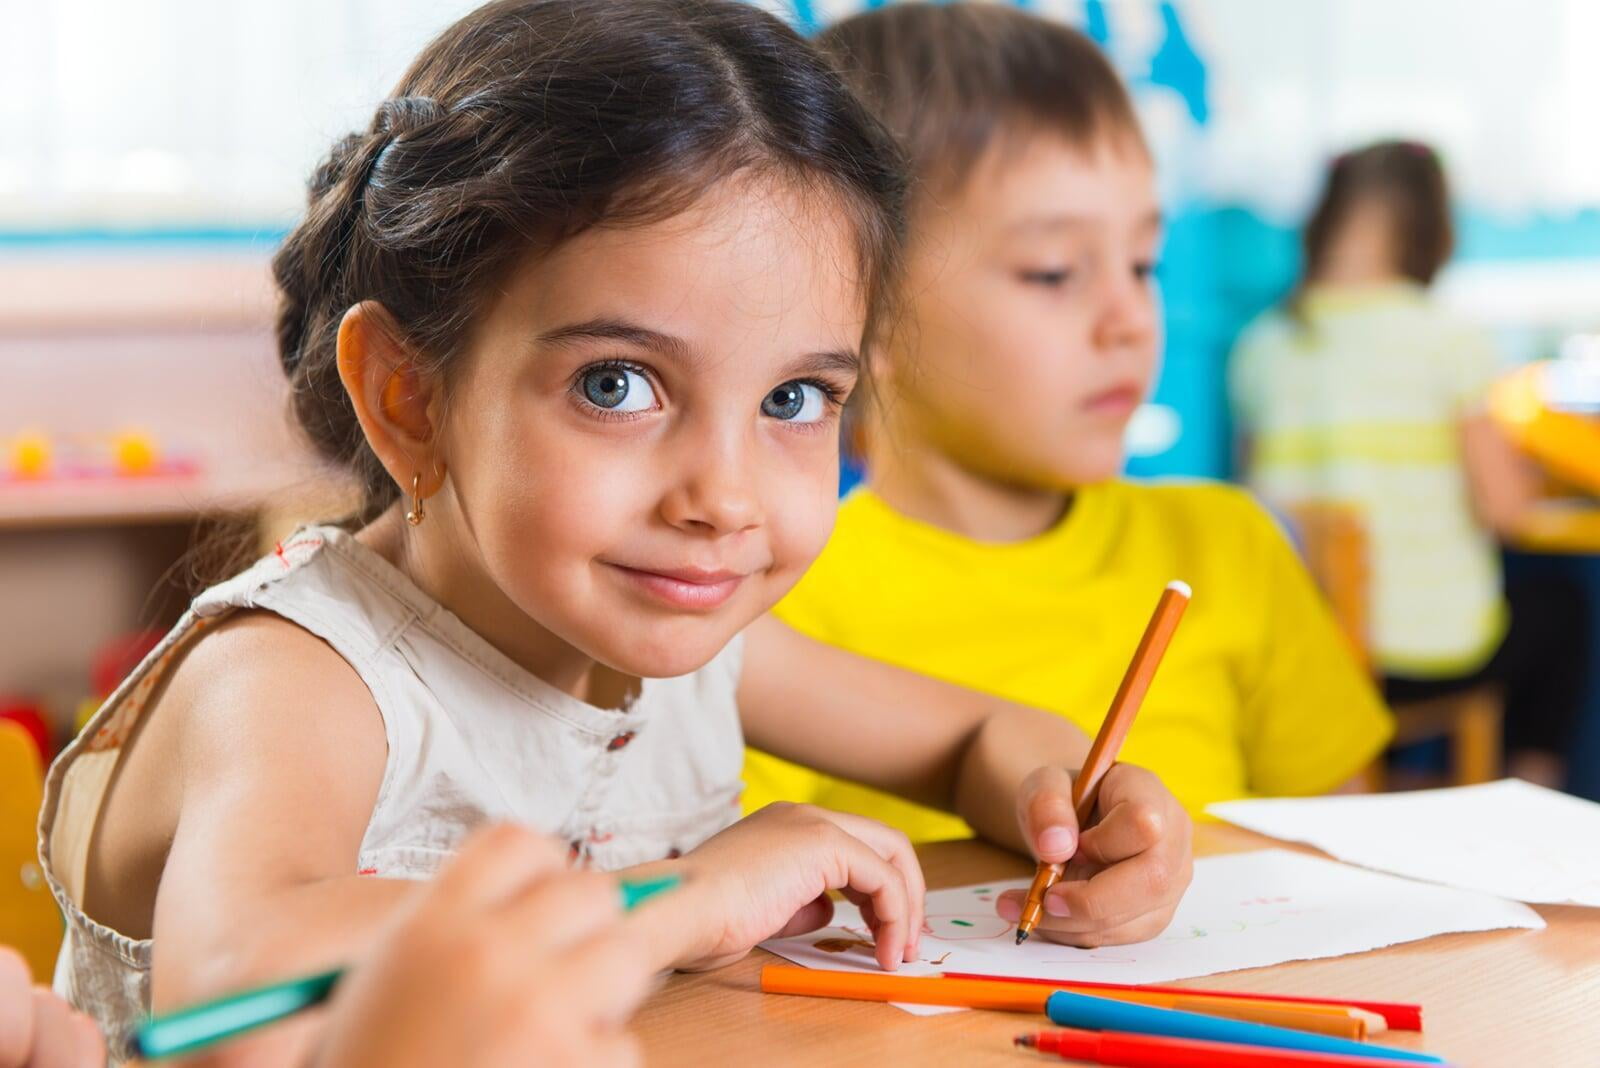 Senate Passes Mandatory Kindergarten For 5 Year-Olds, 21-15 